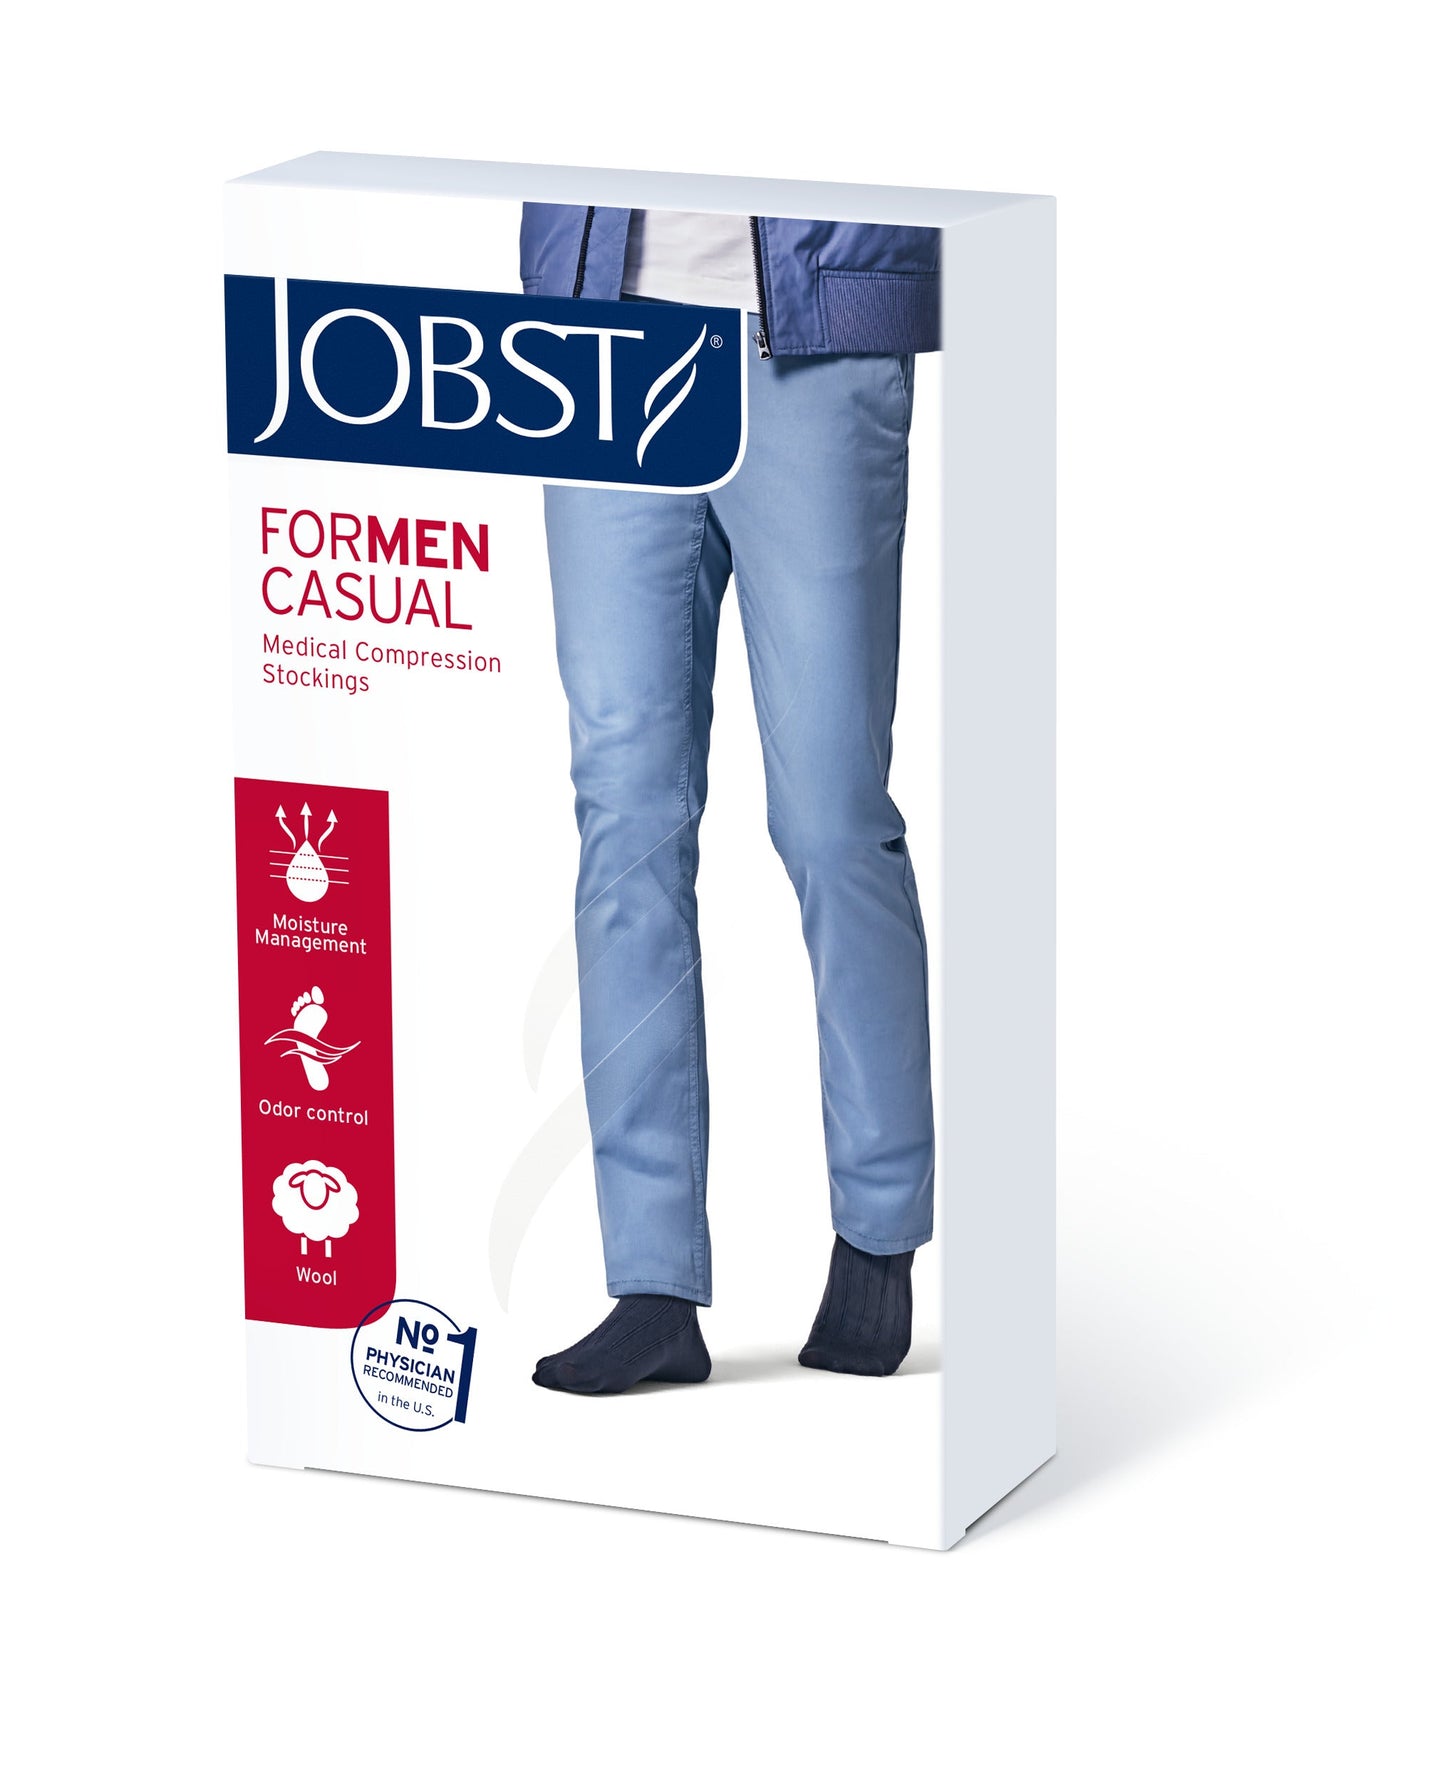 JOBST forMen Casual Knee 15-20 mmHg Closed Toe